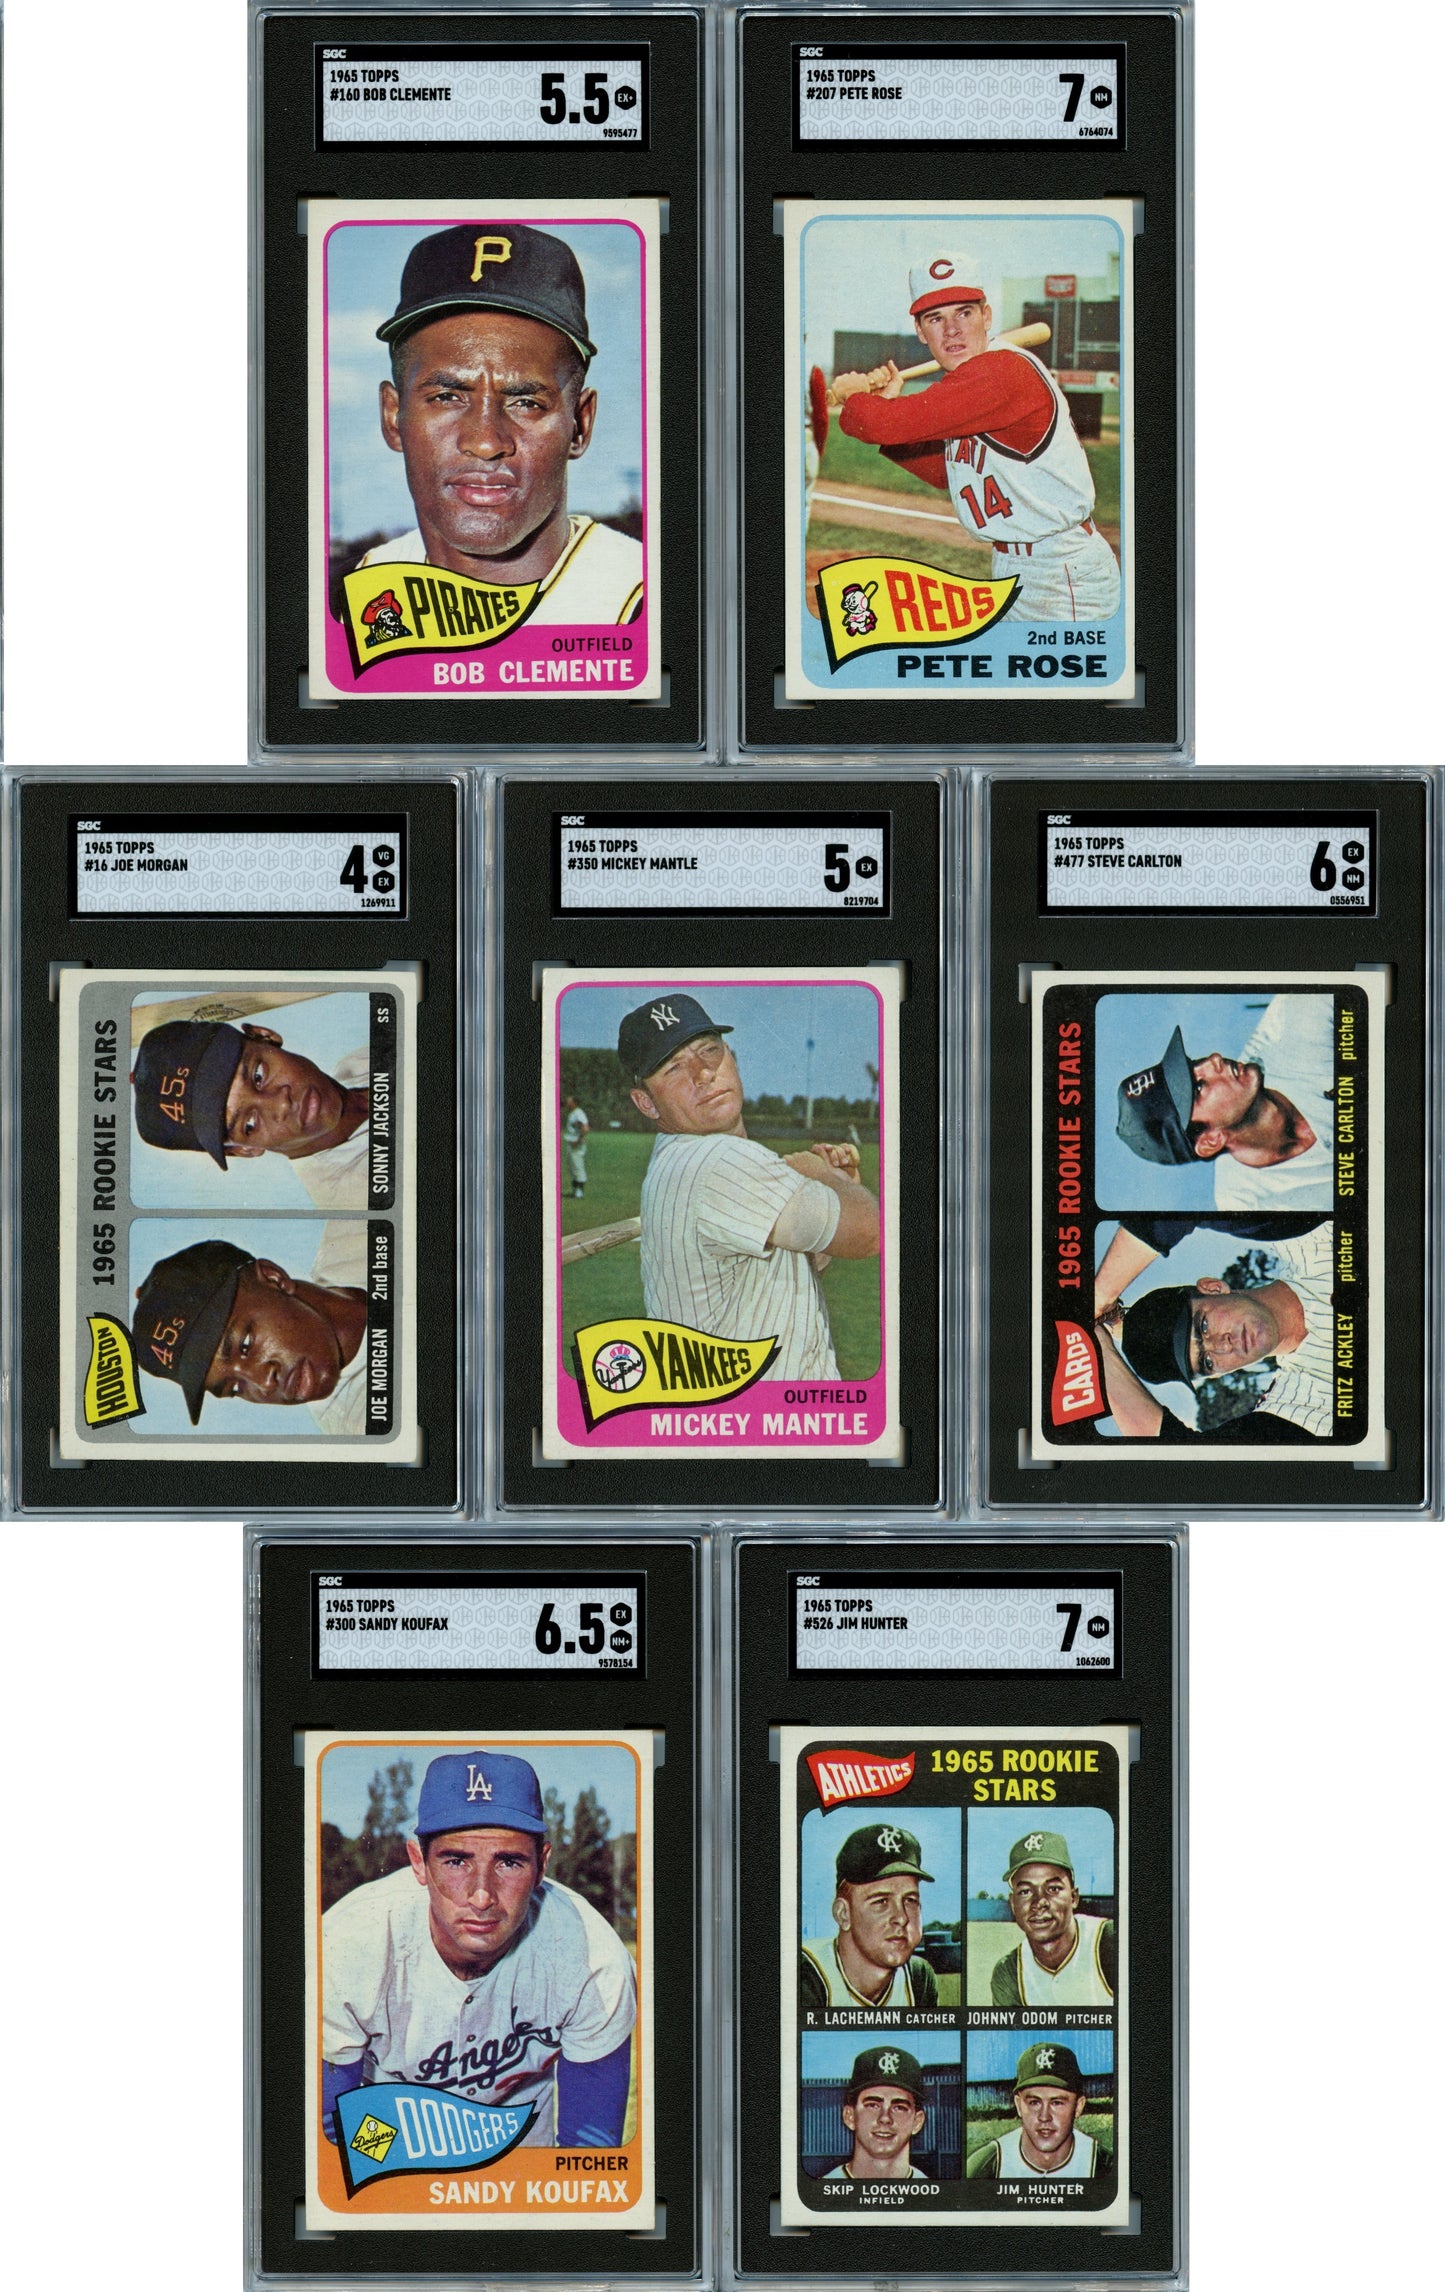 1965 Topps Baseball Set Break 598 Spot Random Card (Mickey Mantle SGC 5, Steve Carlton Rookie SGC 6, Joe Morgan Rookie SGC 4, Catfish Hunter Rookie SGC 7, Pete Rose SGC 7, etc!)